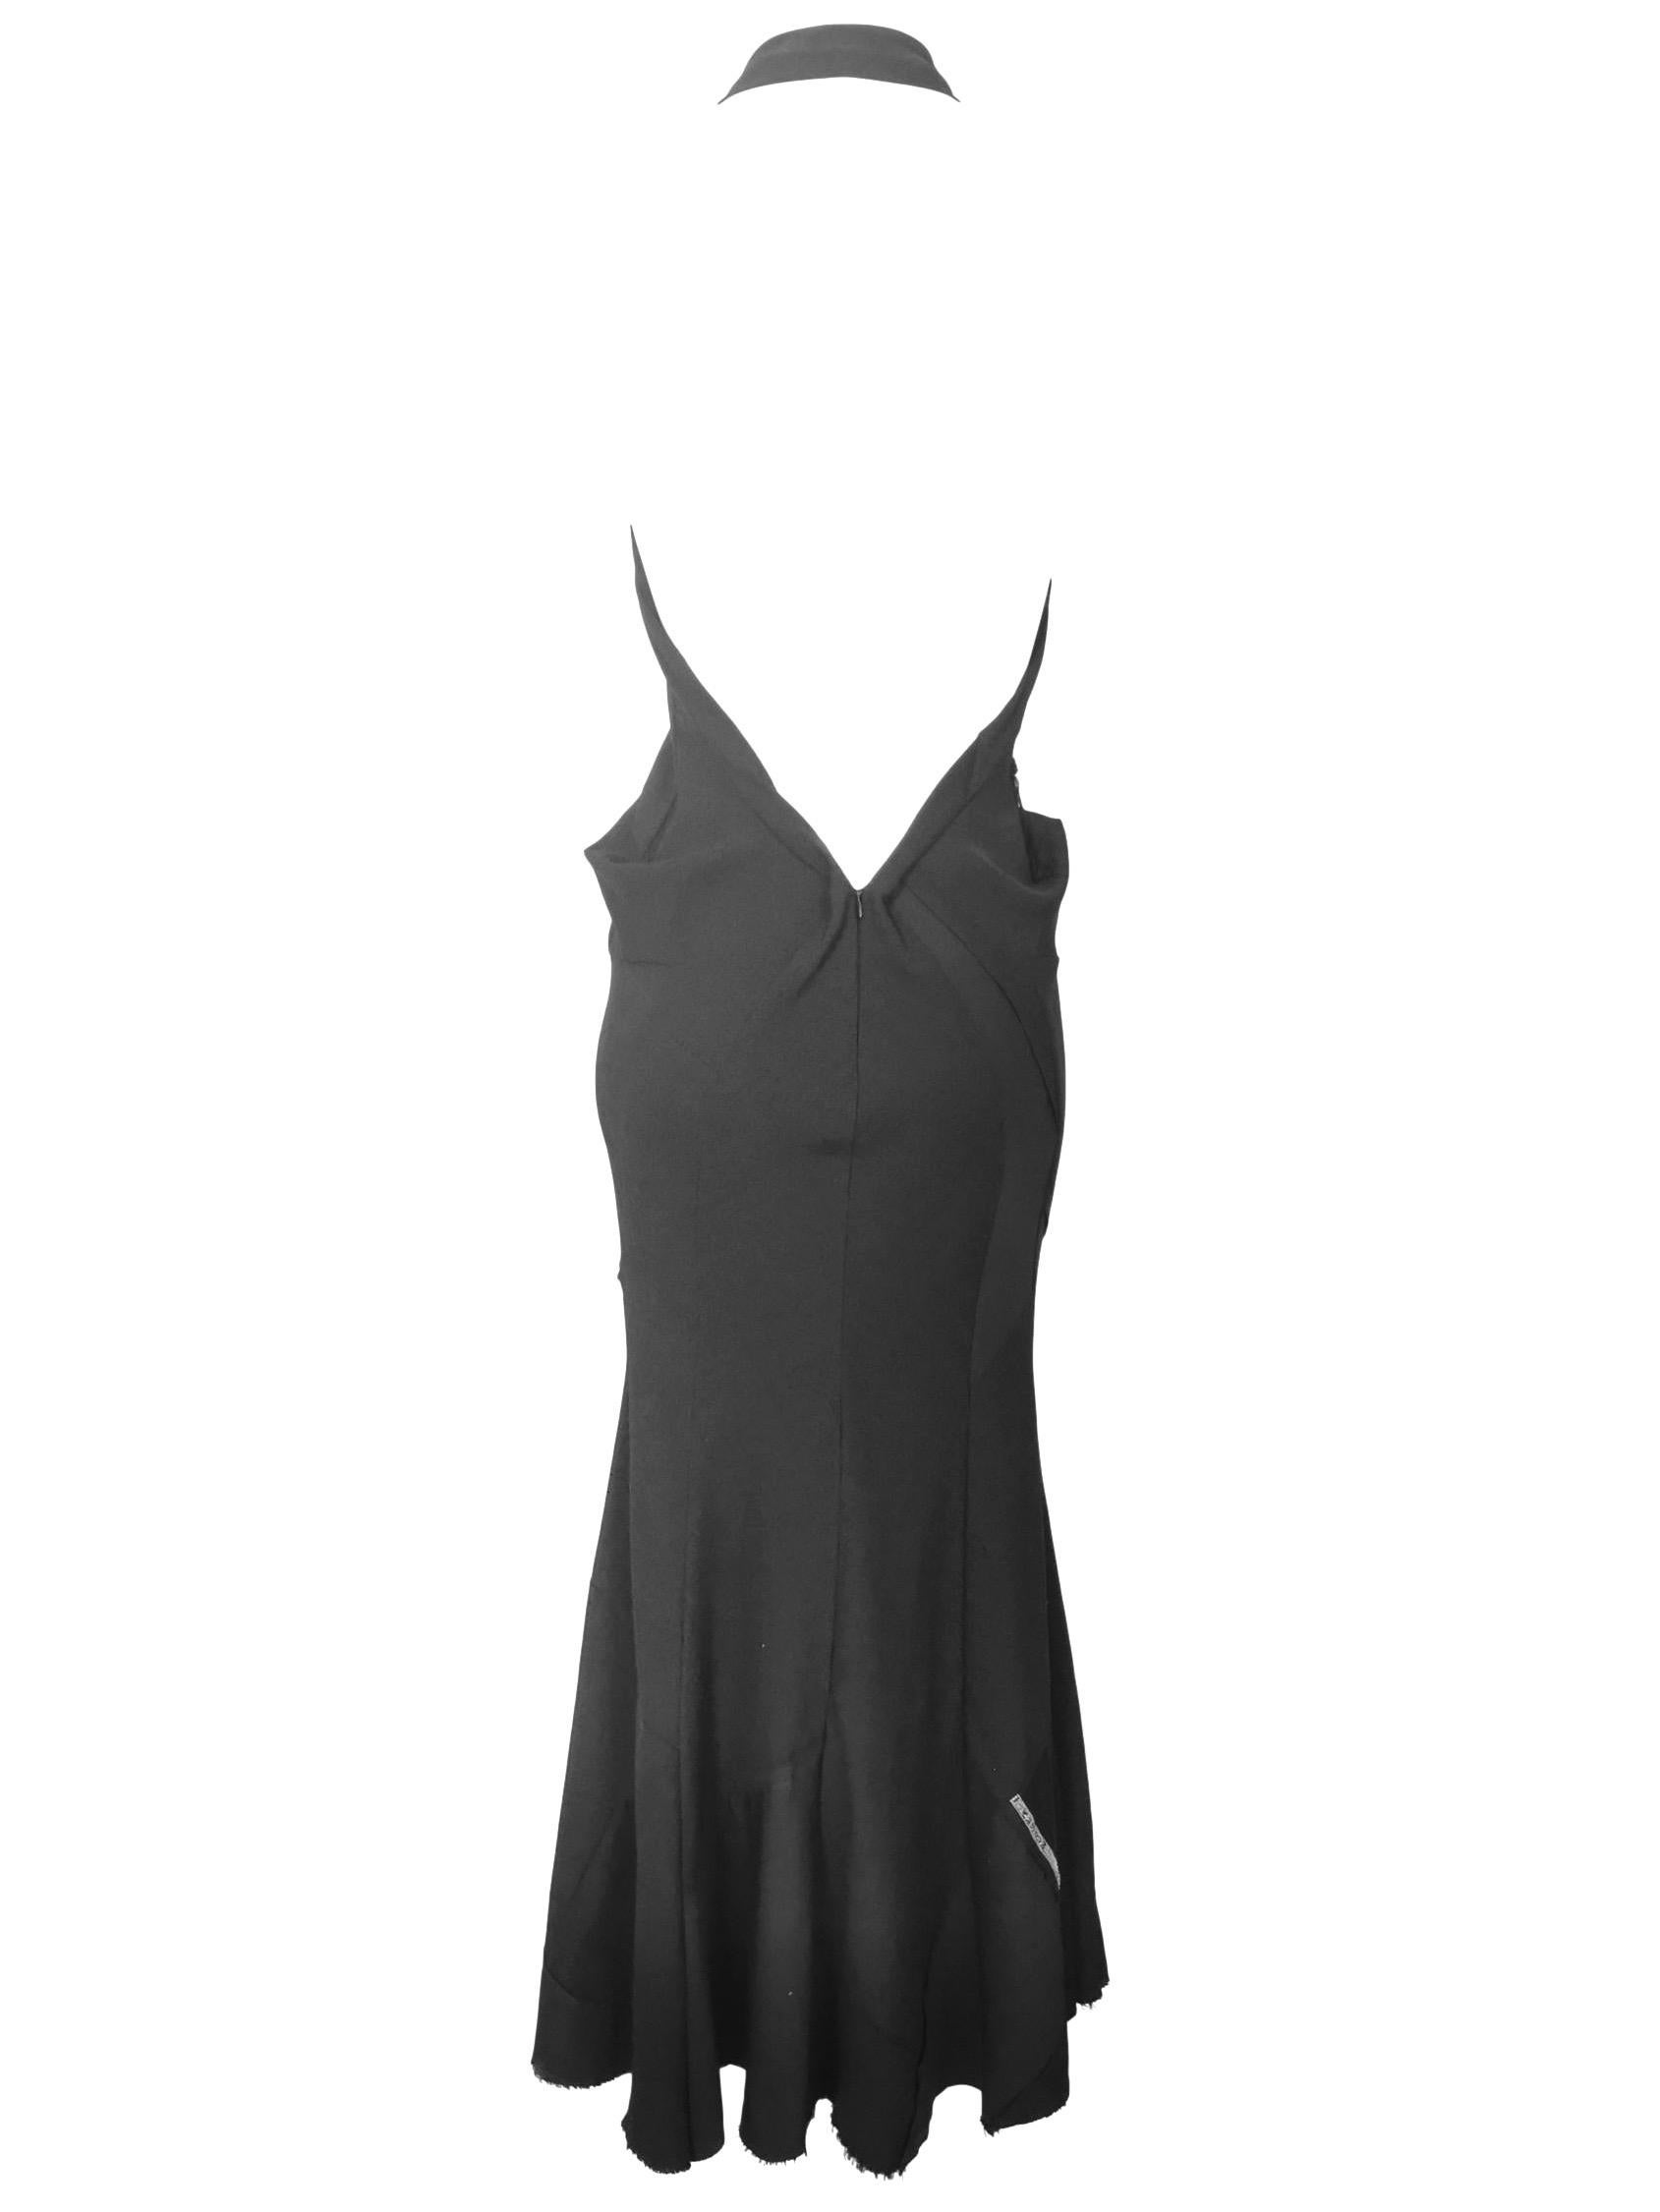 Black Comme des Garcons Junya Watanabe Patchwork Dress AD 2002 For Sale